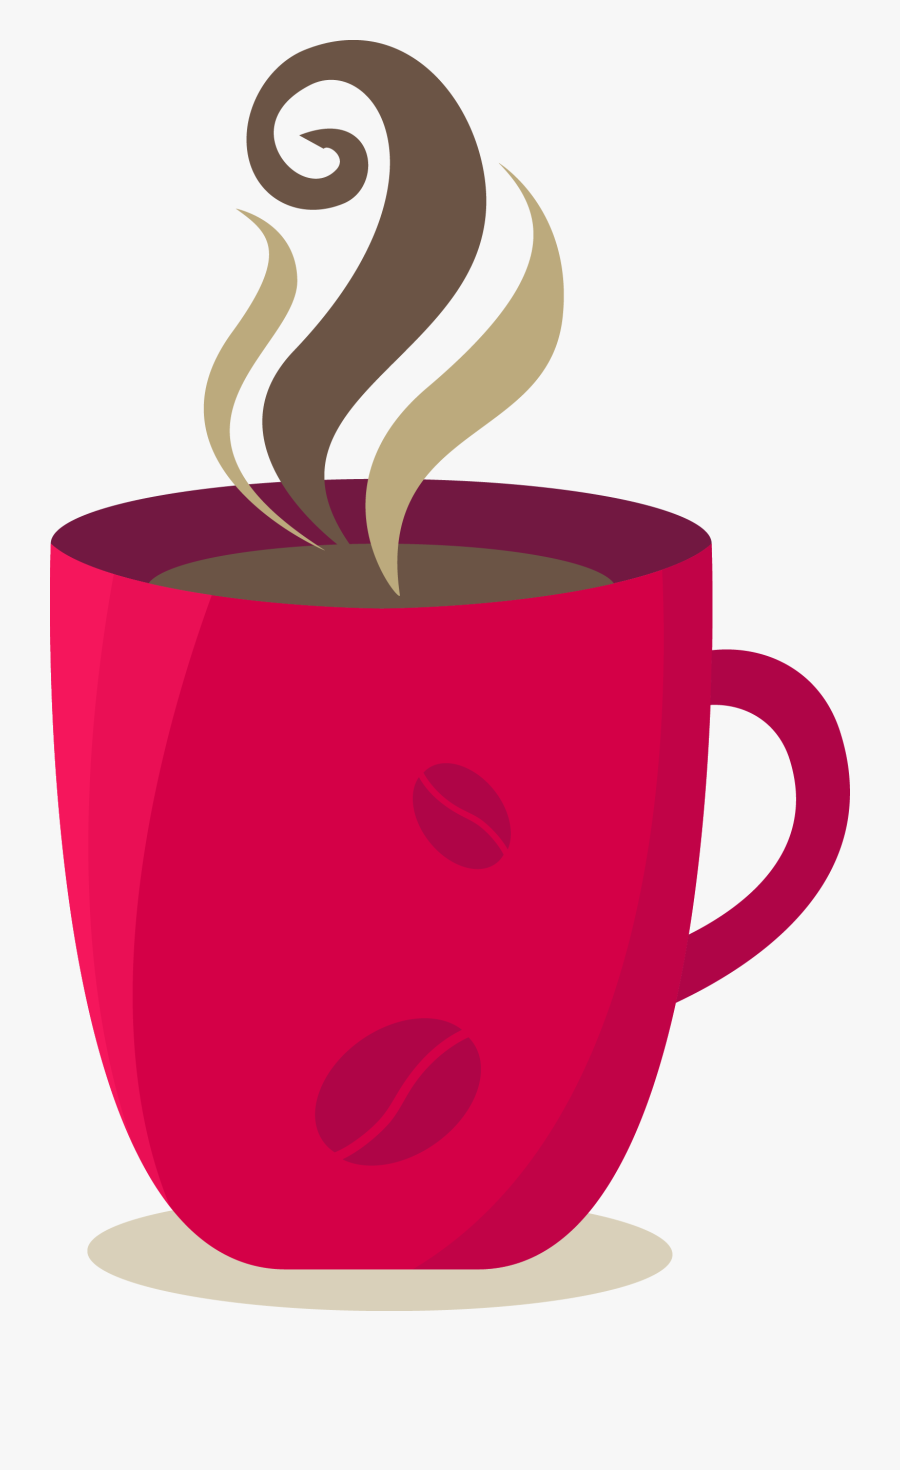 Clip Art Cartoon Coffee Mugs - Coffee Cup Images Cartoon, Transparent Clipart